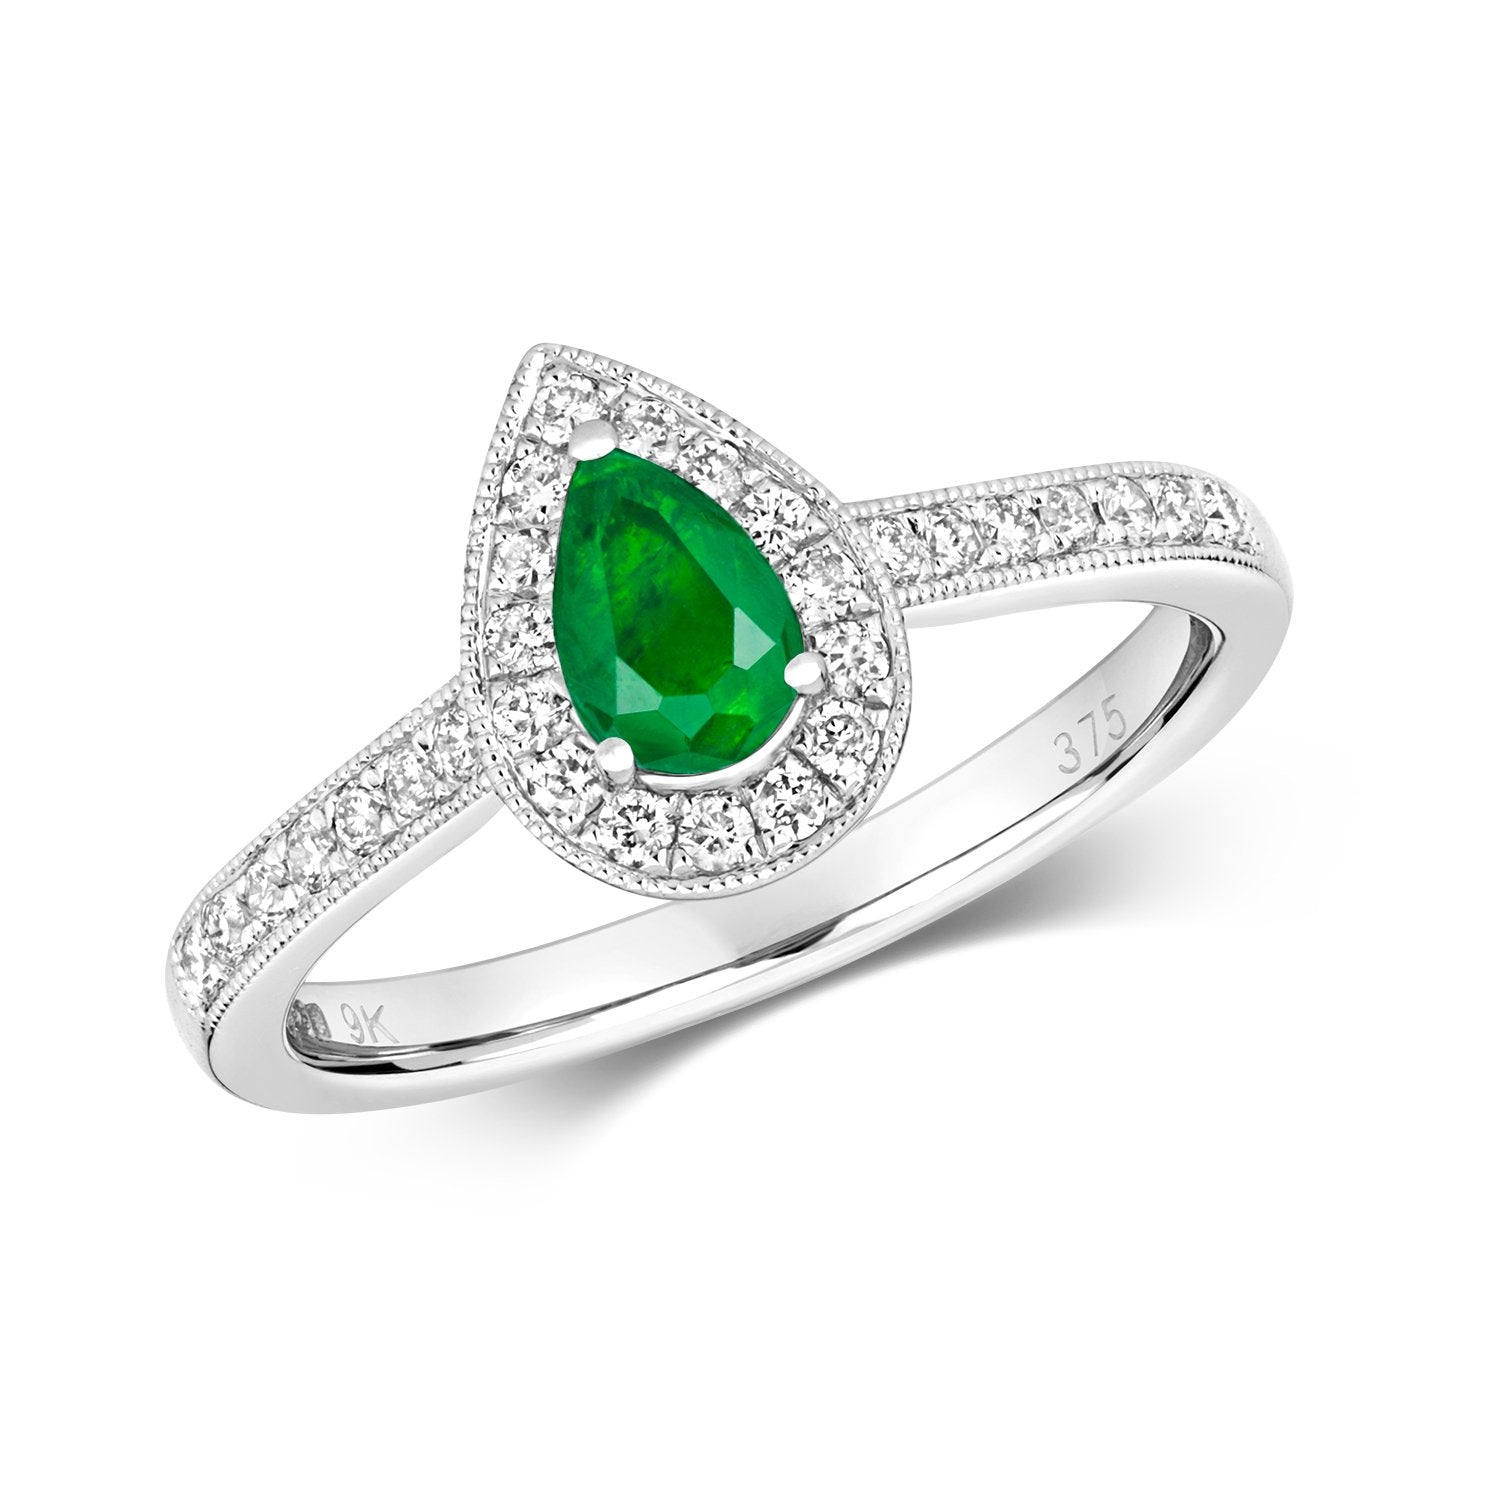 Emerald & Diamond Pear Shape Ring (Rd418we)